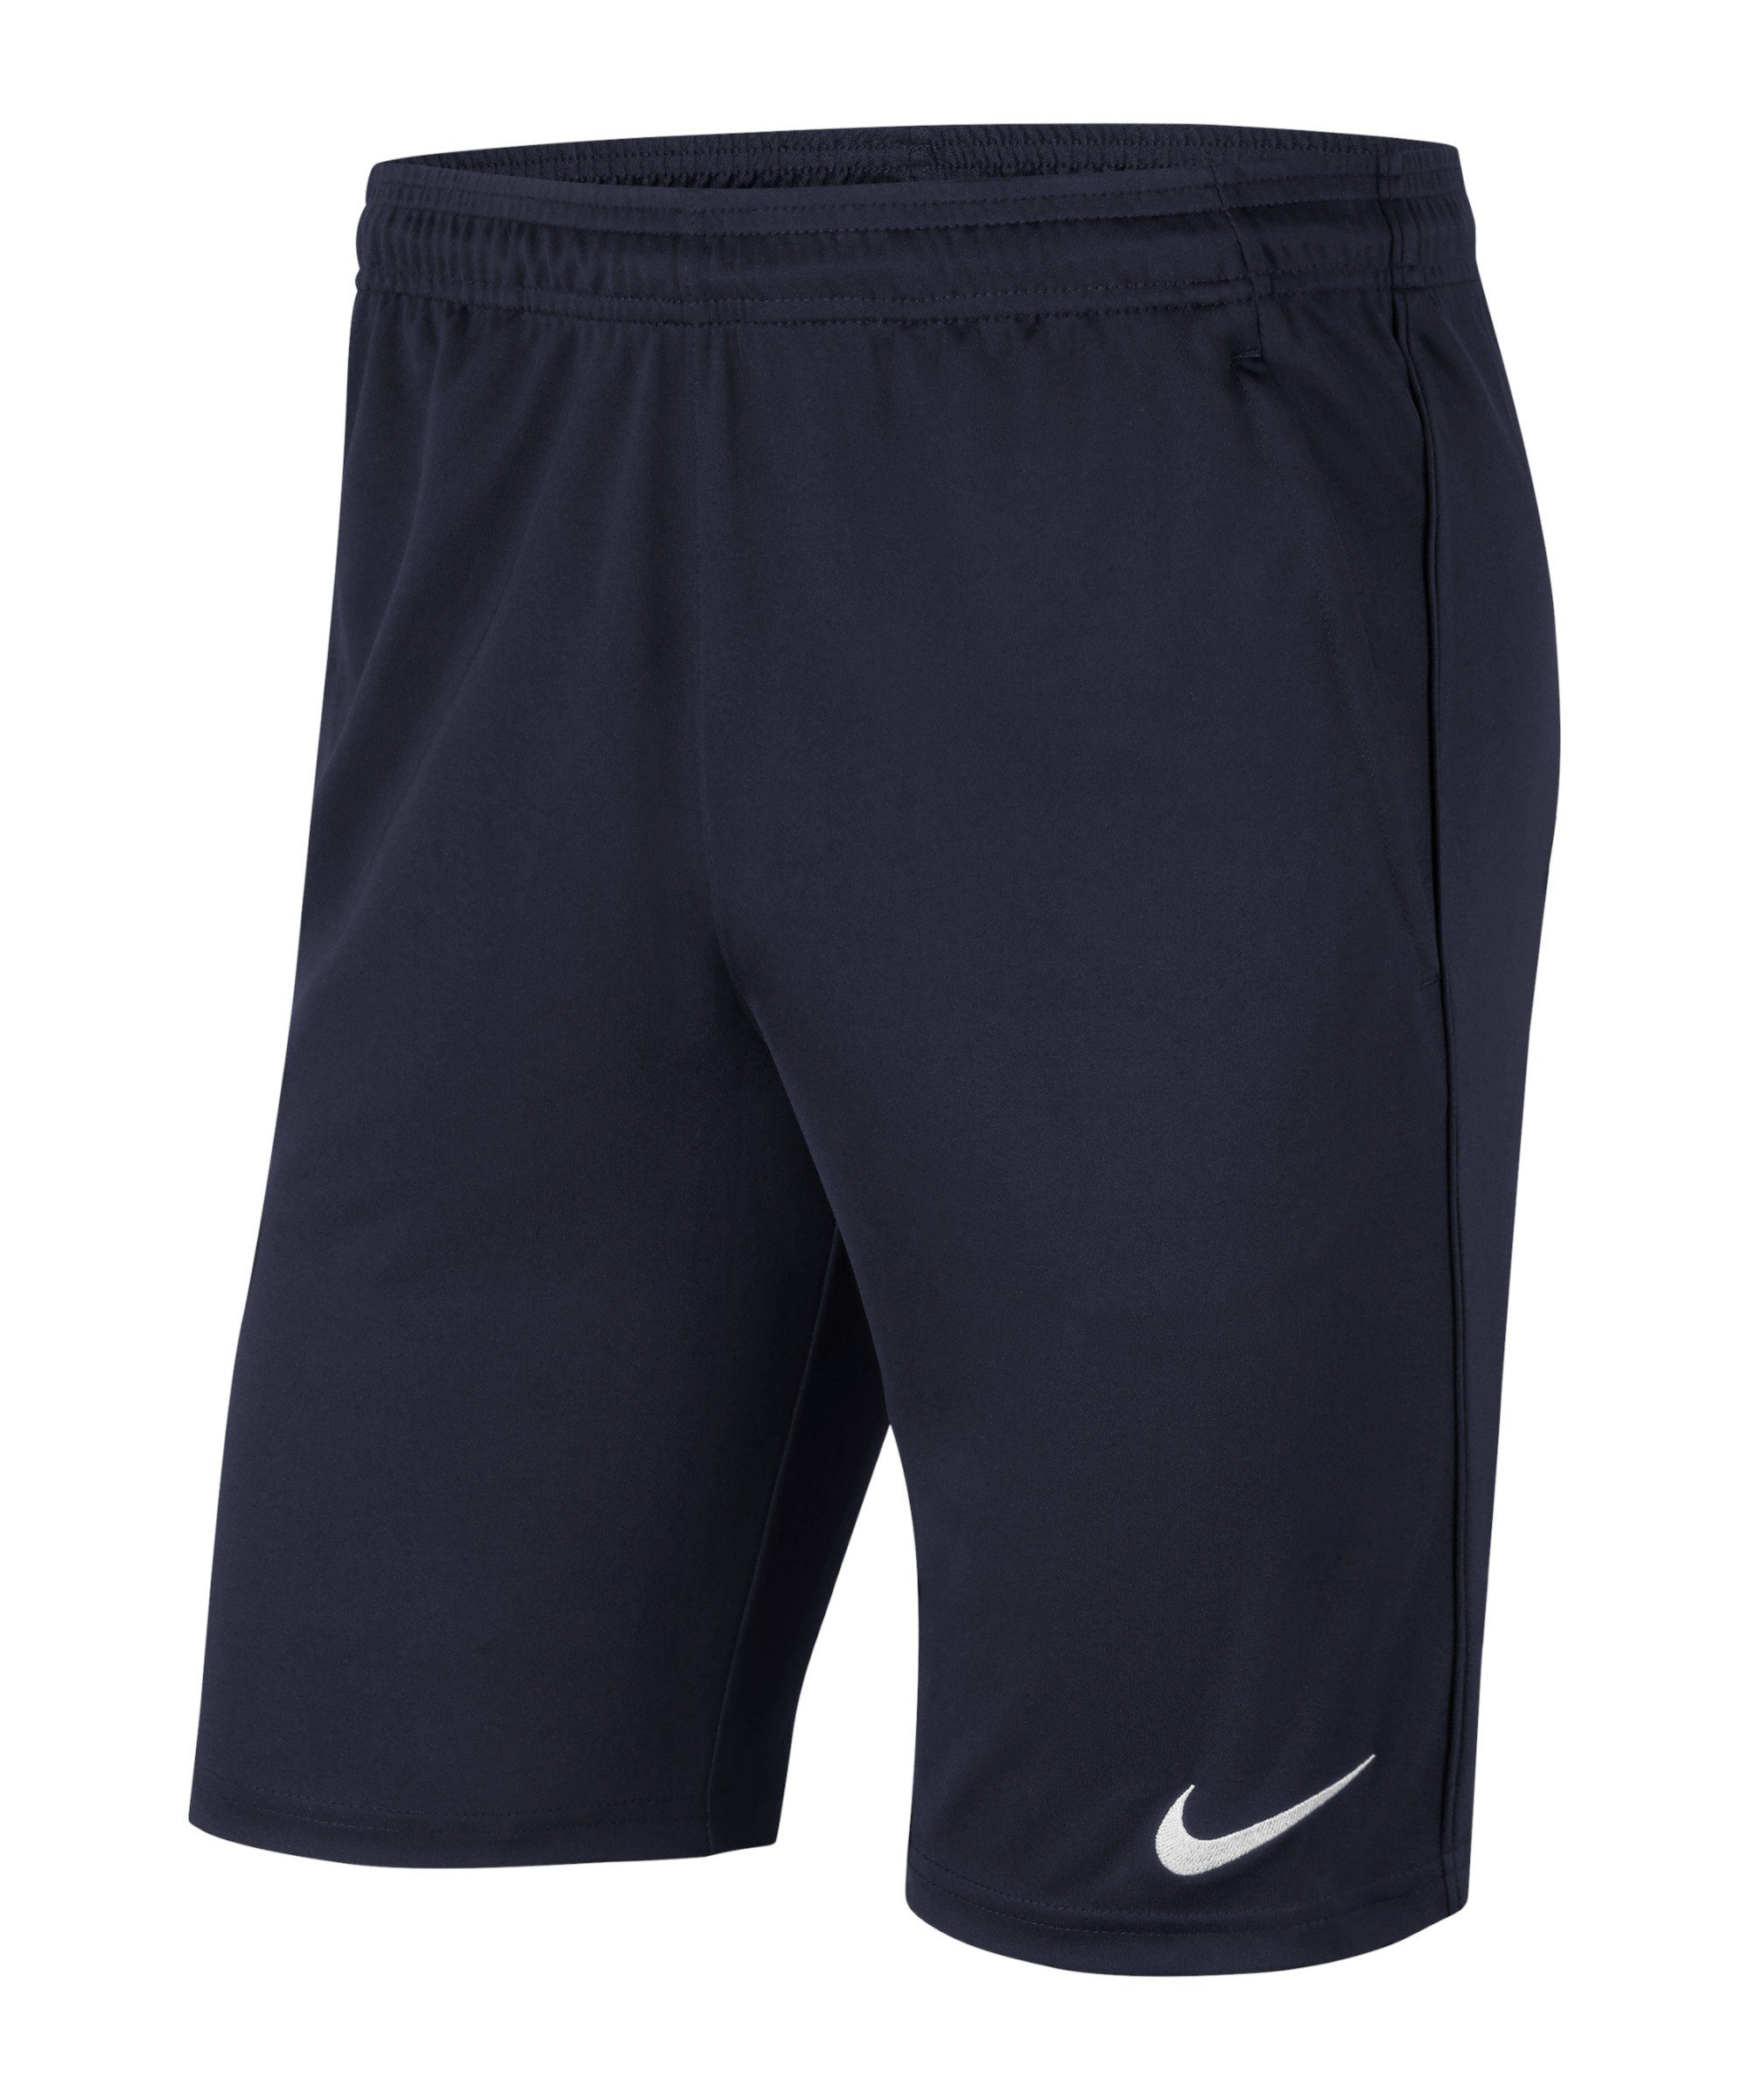 Sporthose Knit blauweiss 20 Park Short Nike